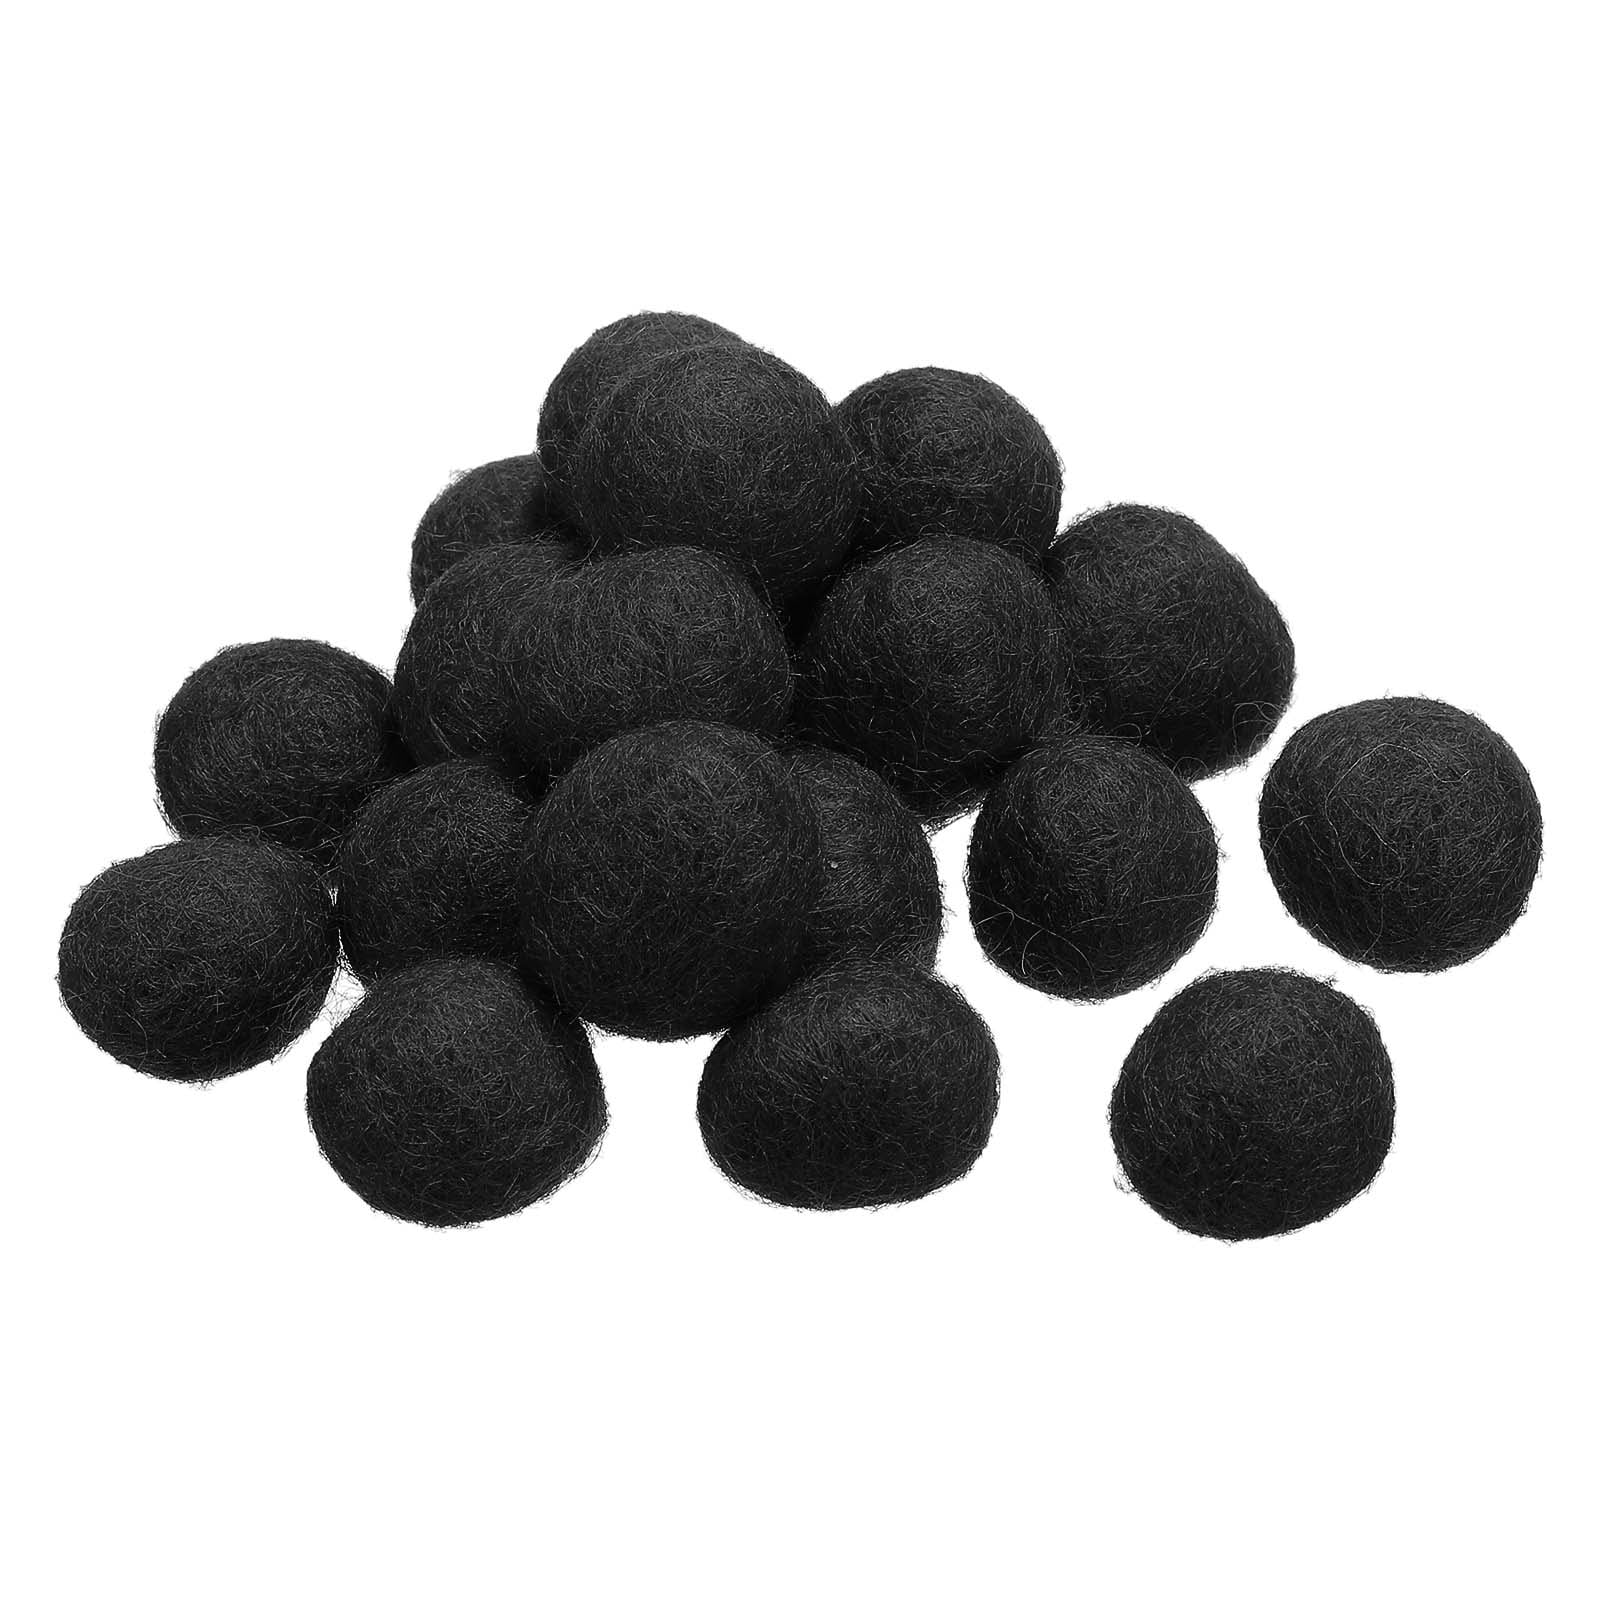 Wool Felt Balls Beads Woolen Fabric 2cm 20mm White for Home Crafts 20Pcs